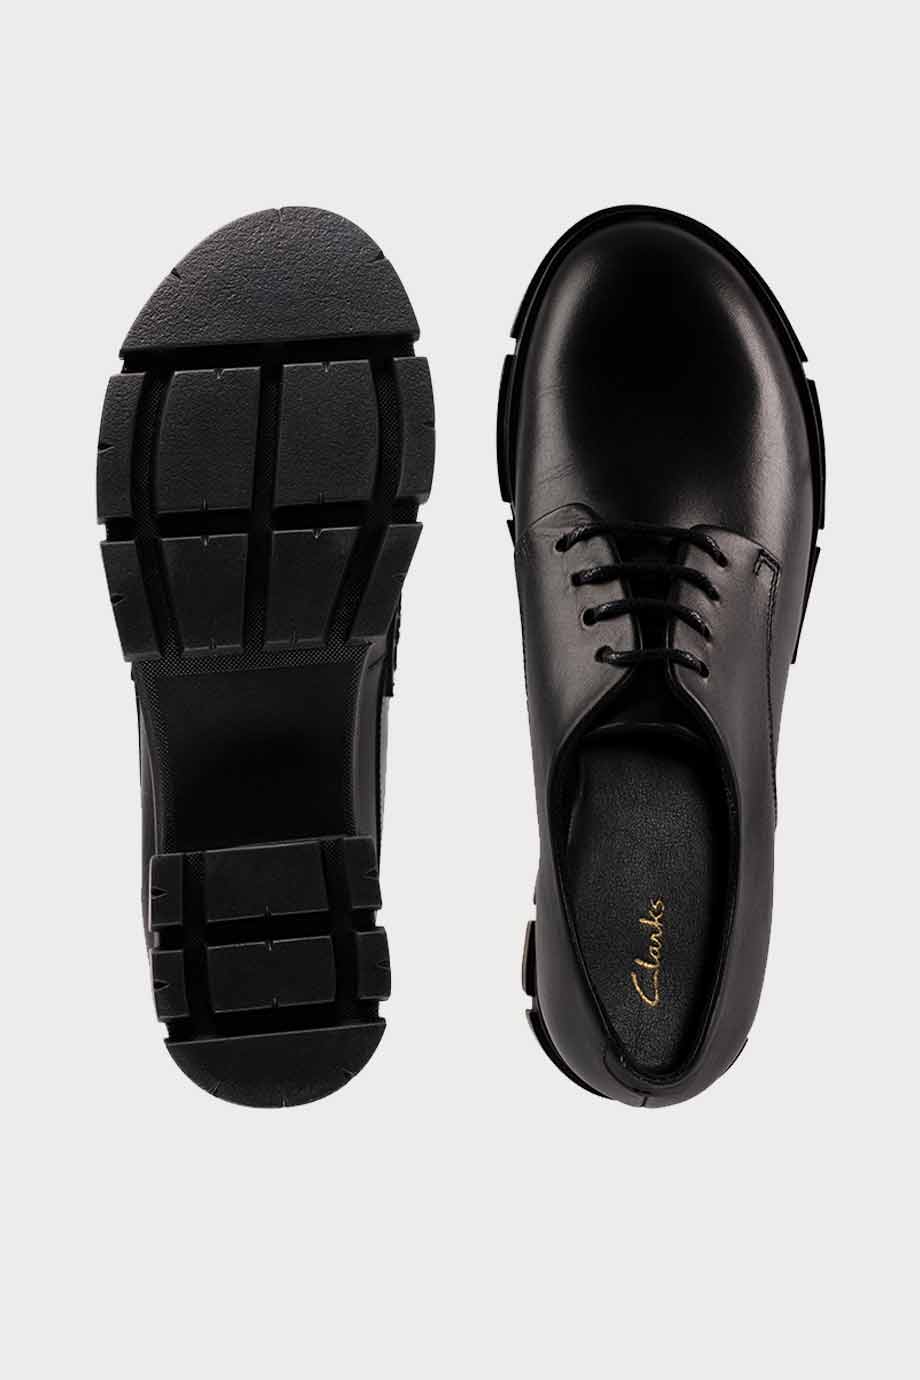 spiridoula metheniti shoes xalkida teala leace black leather clarks 7 p